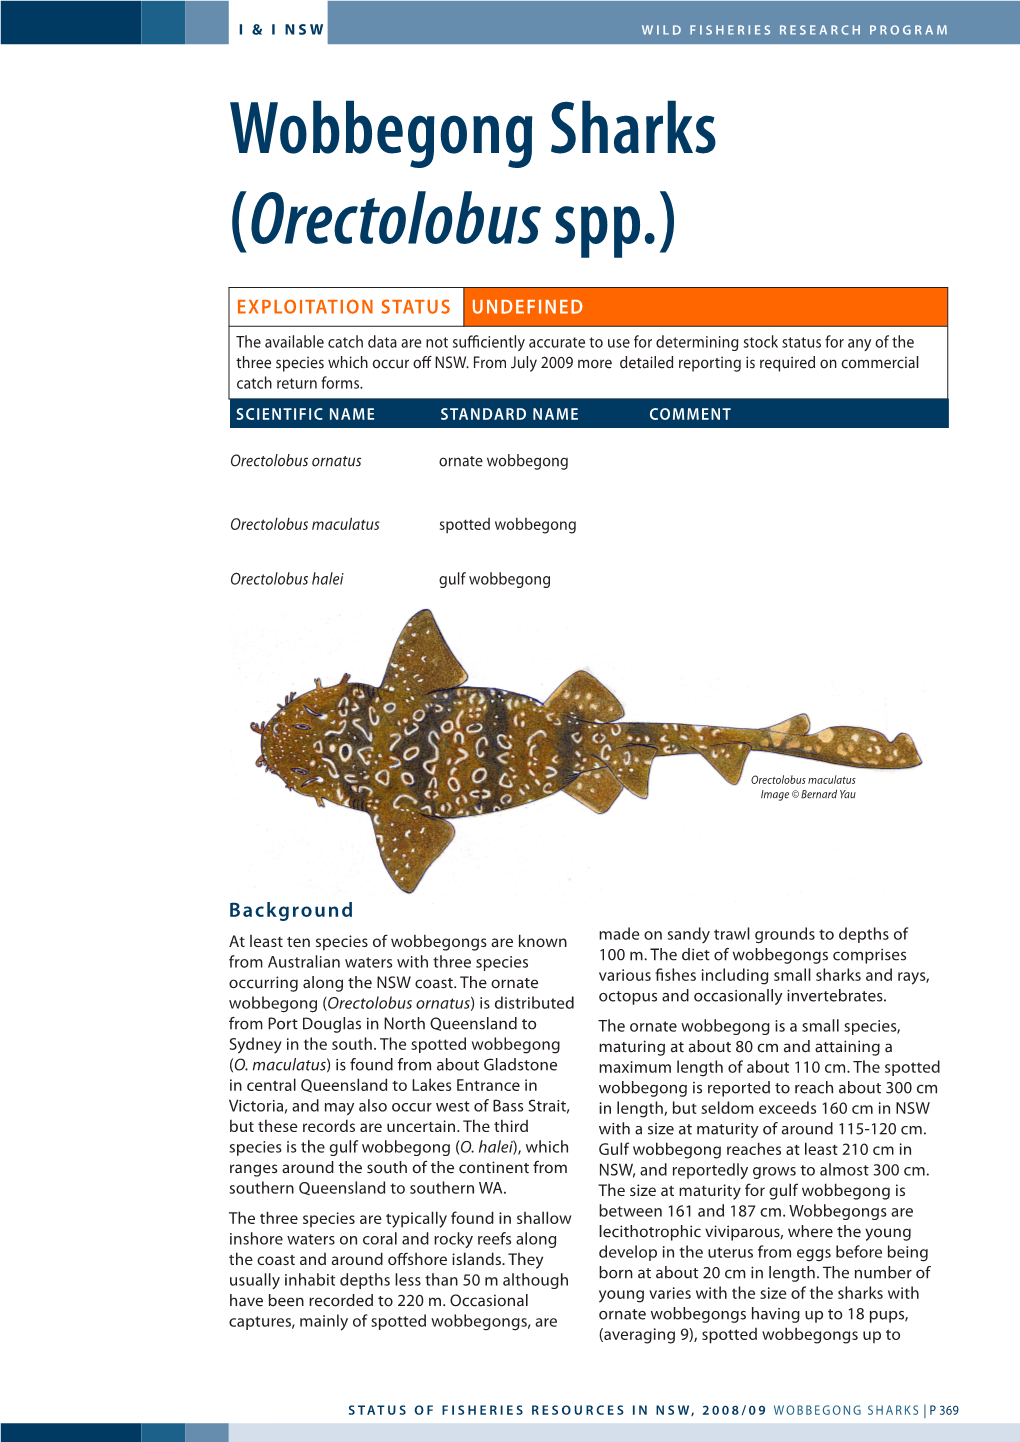 Wobbegong Sharks (Orectolobus Spp.)